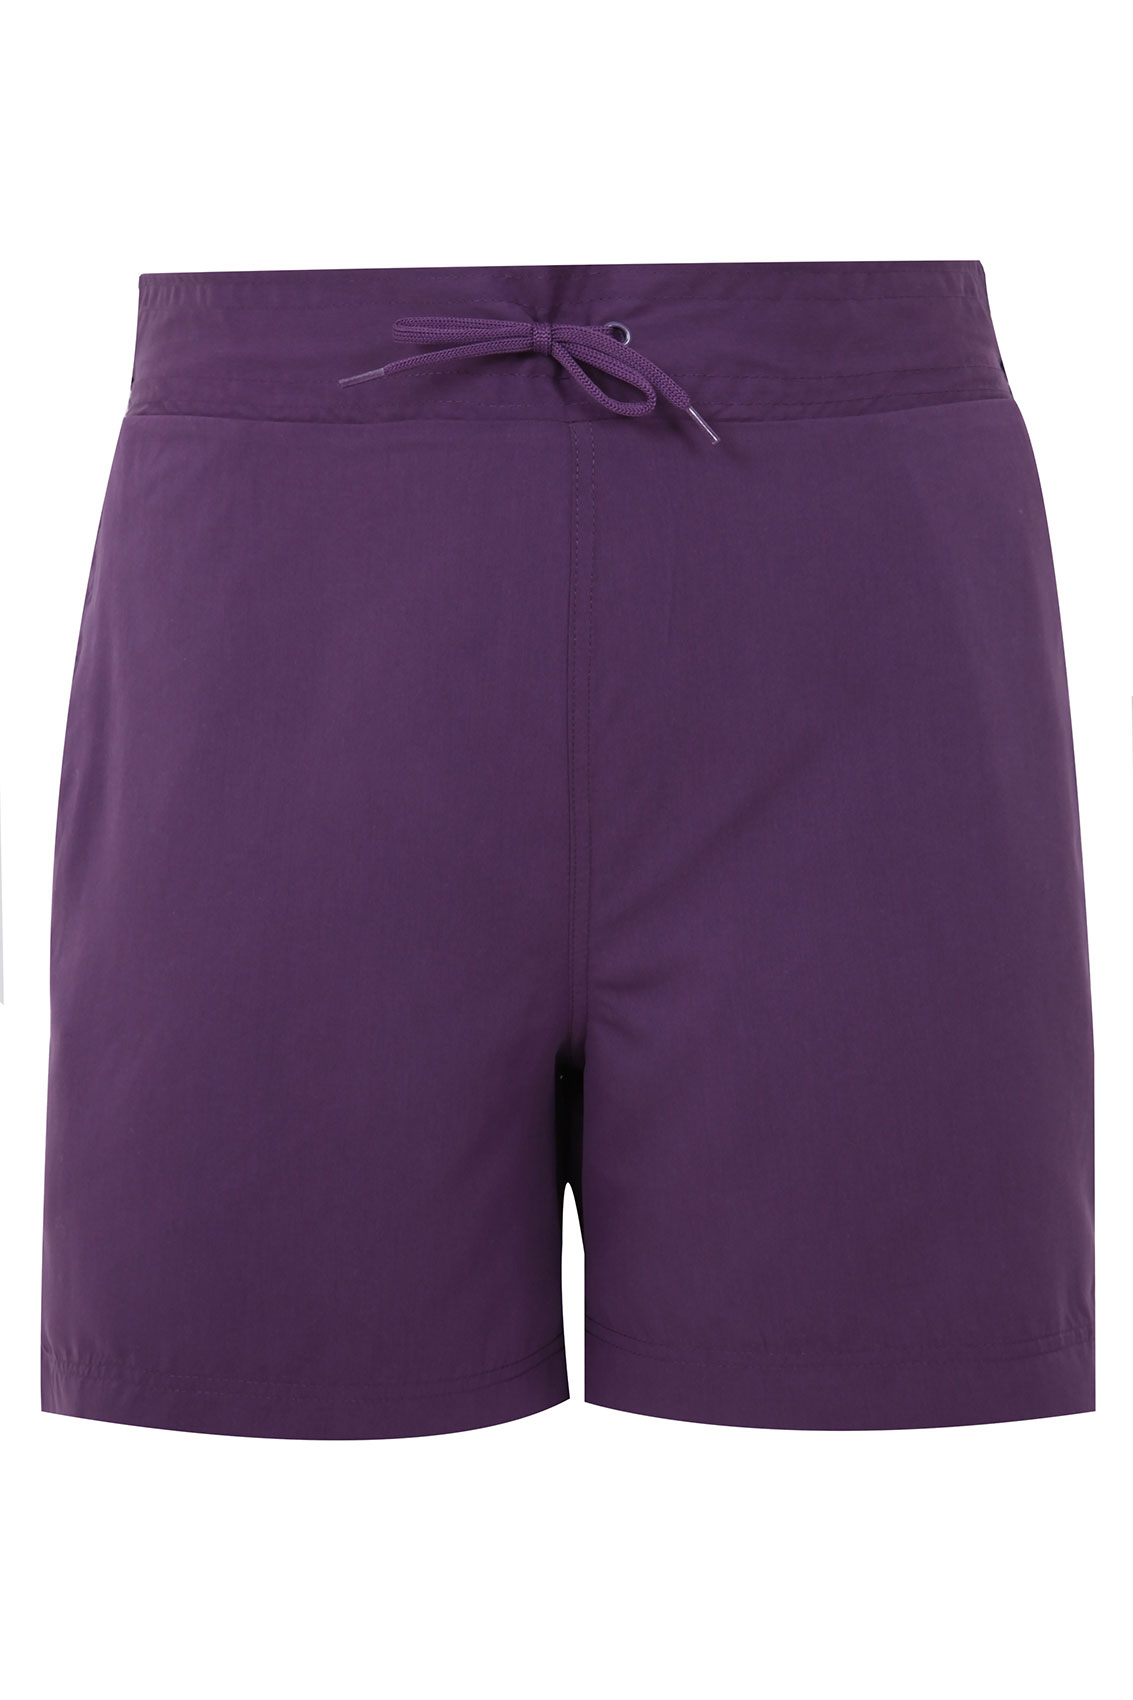 Purple Board Shorts With Drawstring Waist Plus size plus sizes: 16,18 ...